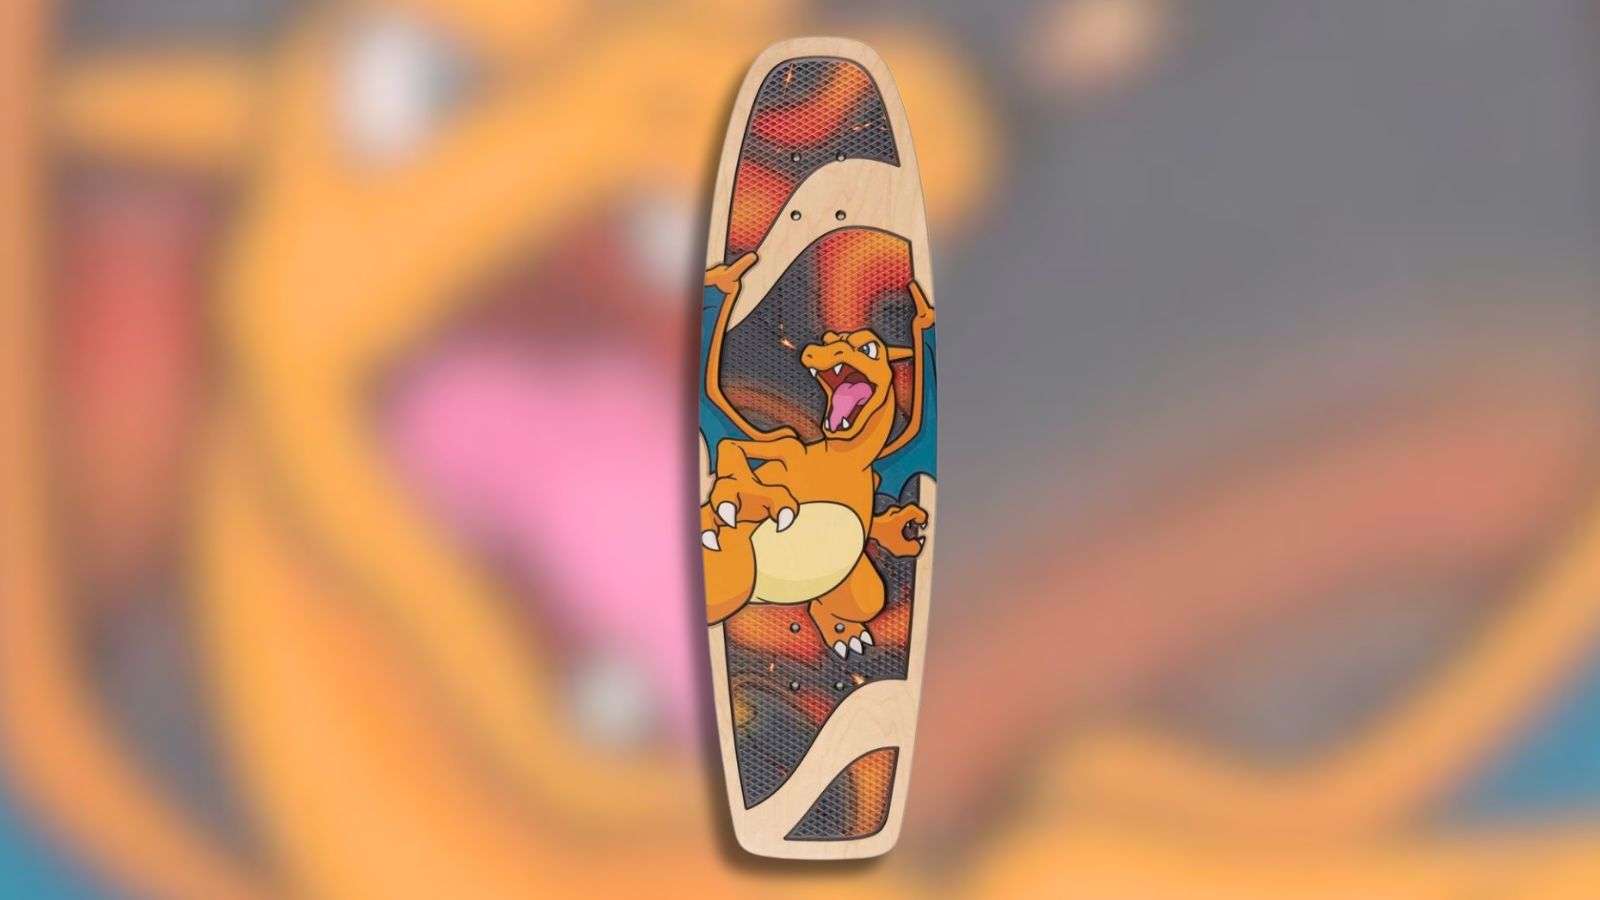 Charizard Skateboard with Charizard background